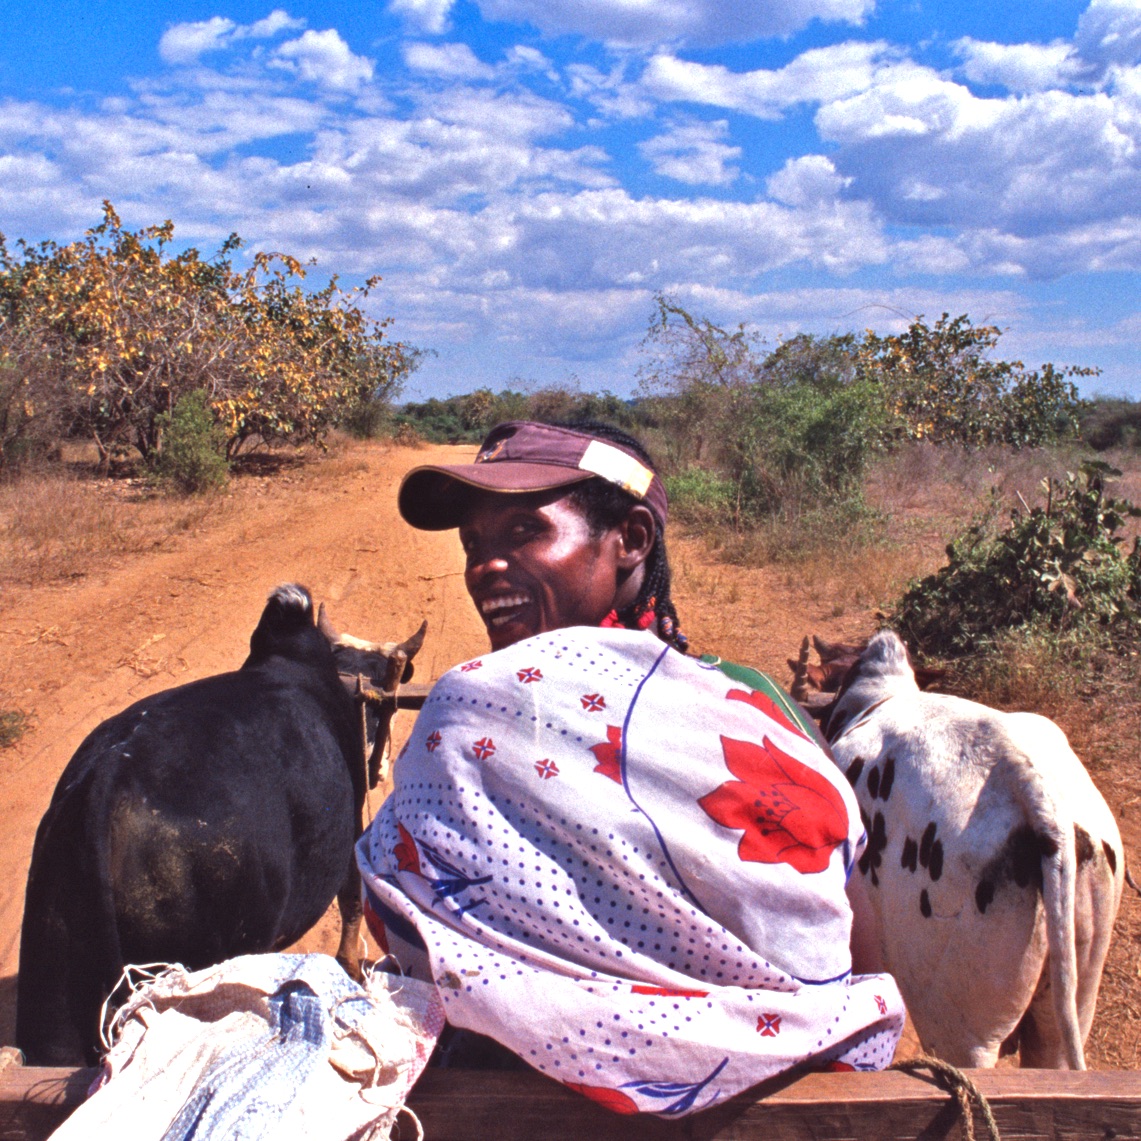 Riding an ox cart in Madagascar